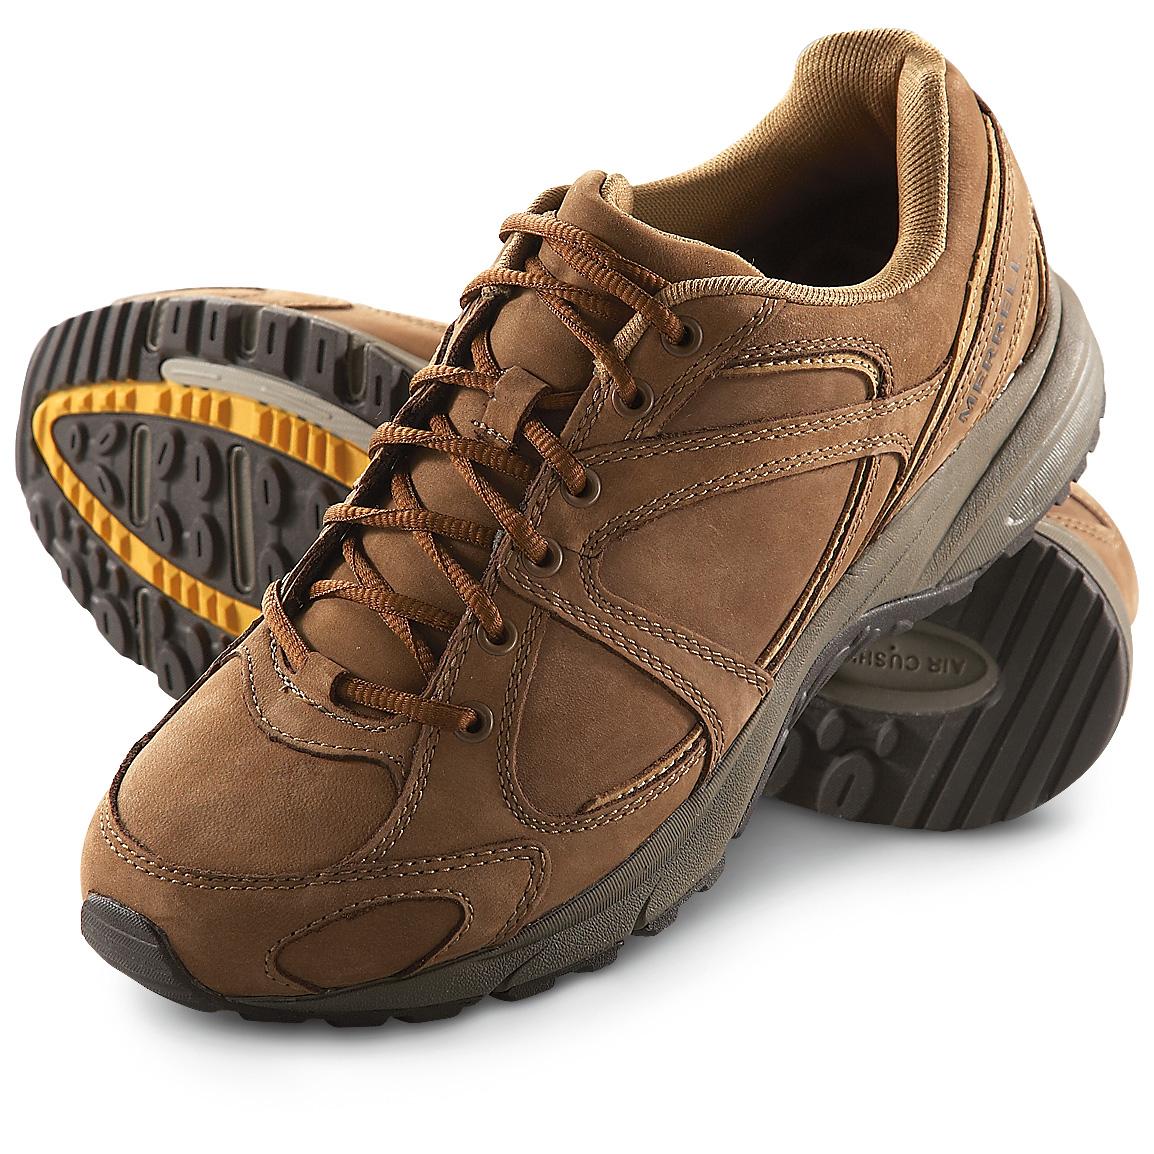 Men's Merrell® Meridian Walking Shoes, Dark Earth 220275, Running